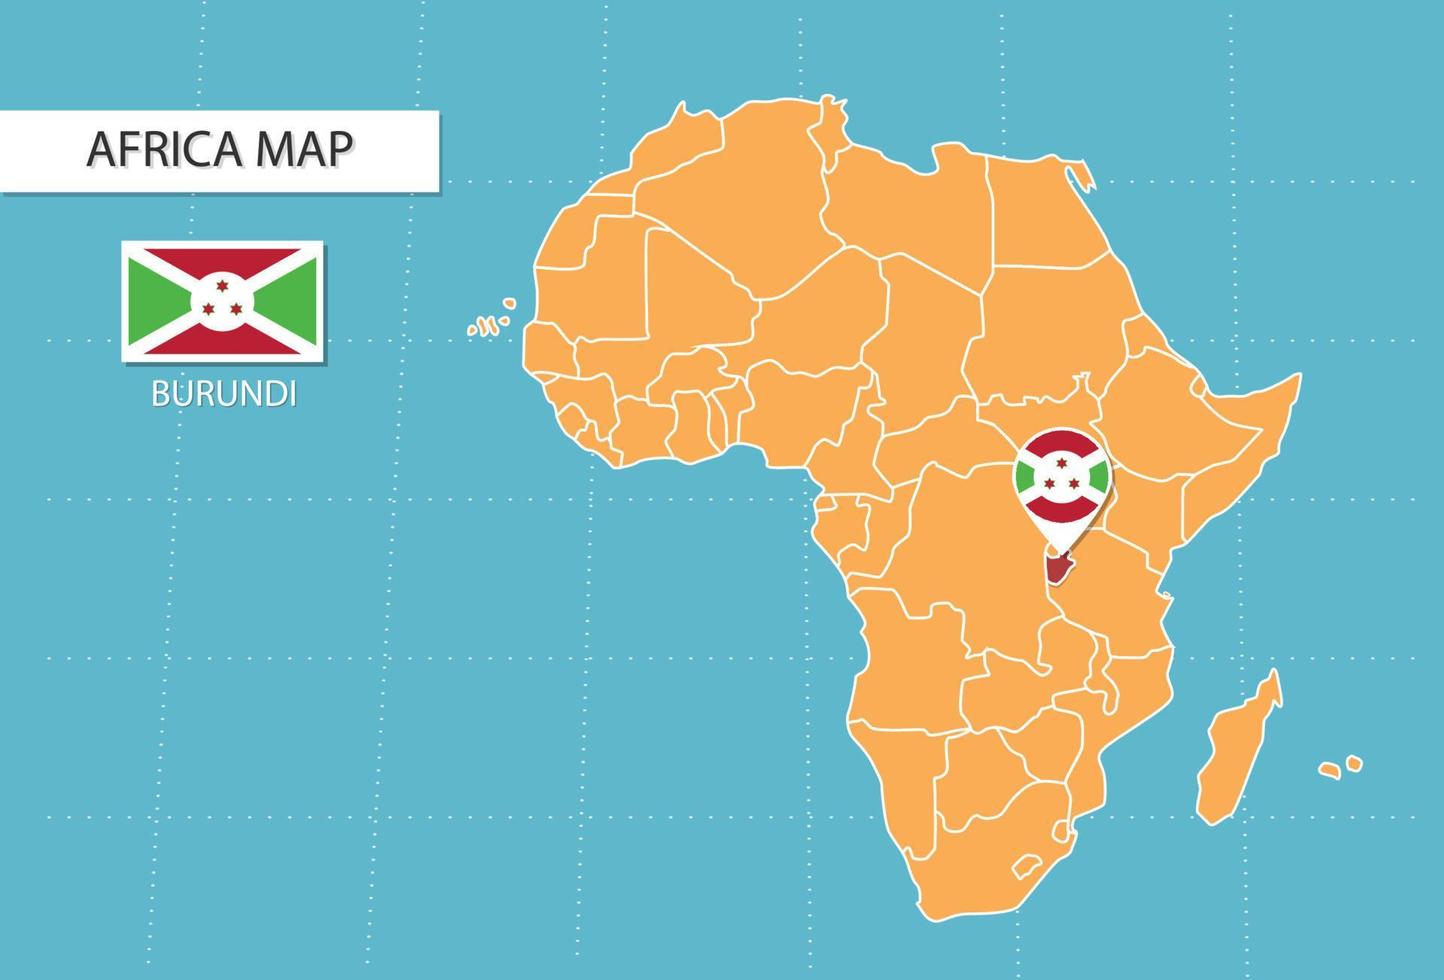 burundi Karta i afrika, ikoner som visar burundi plats och flaggor. vektor